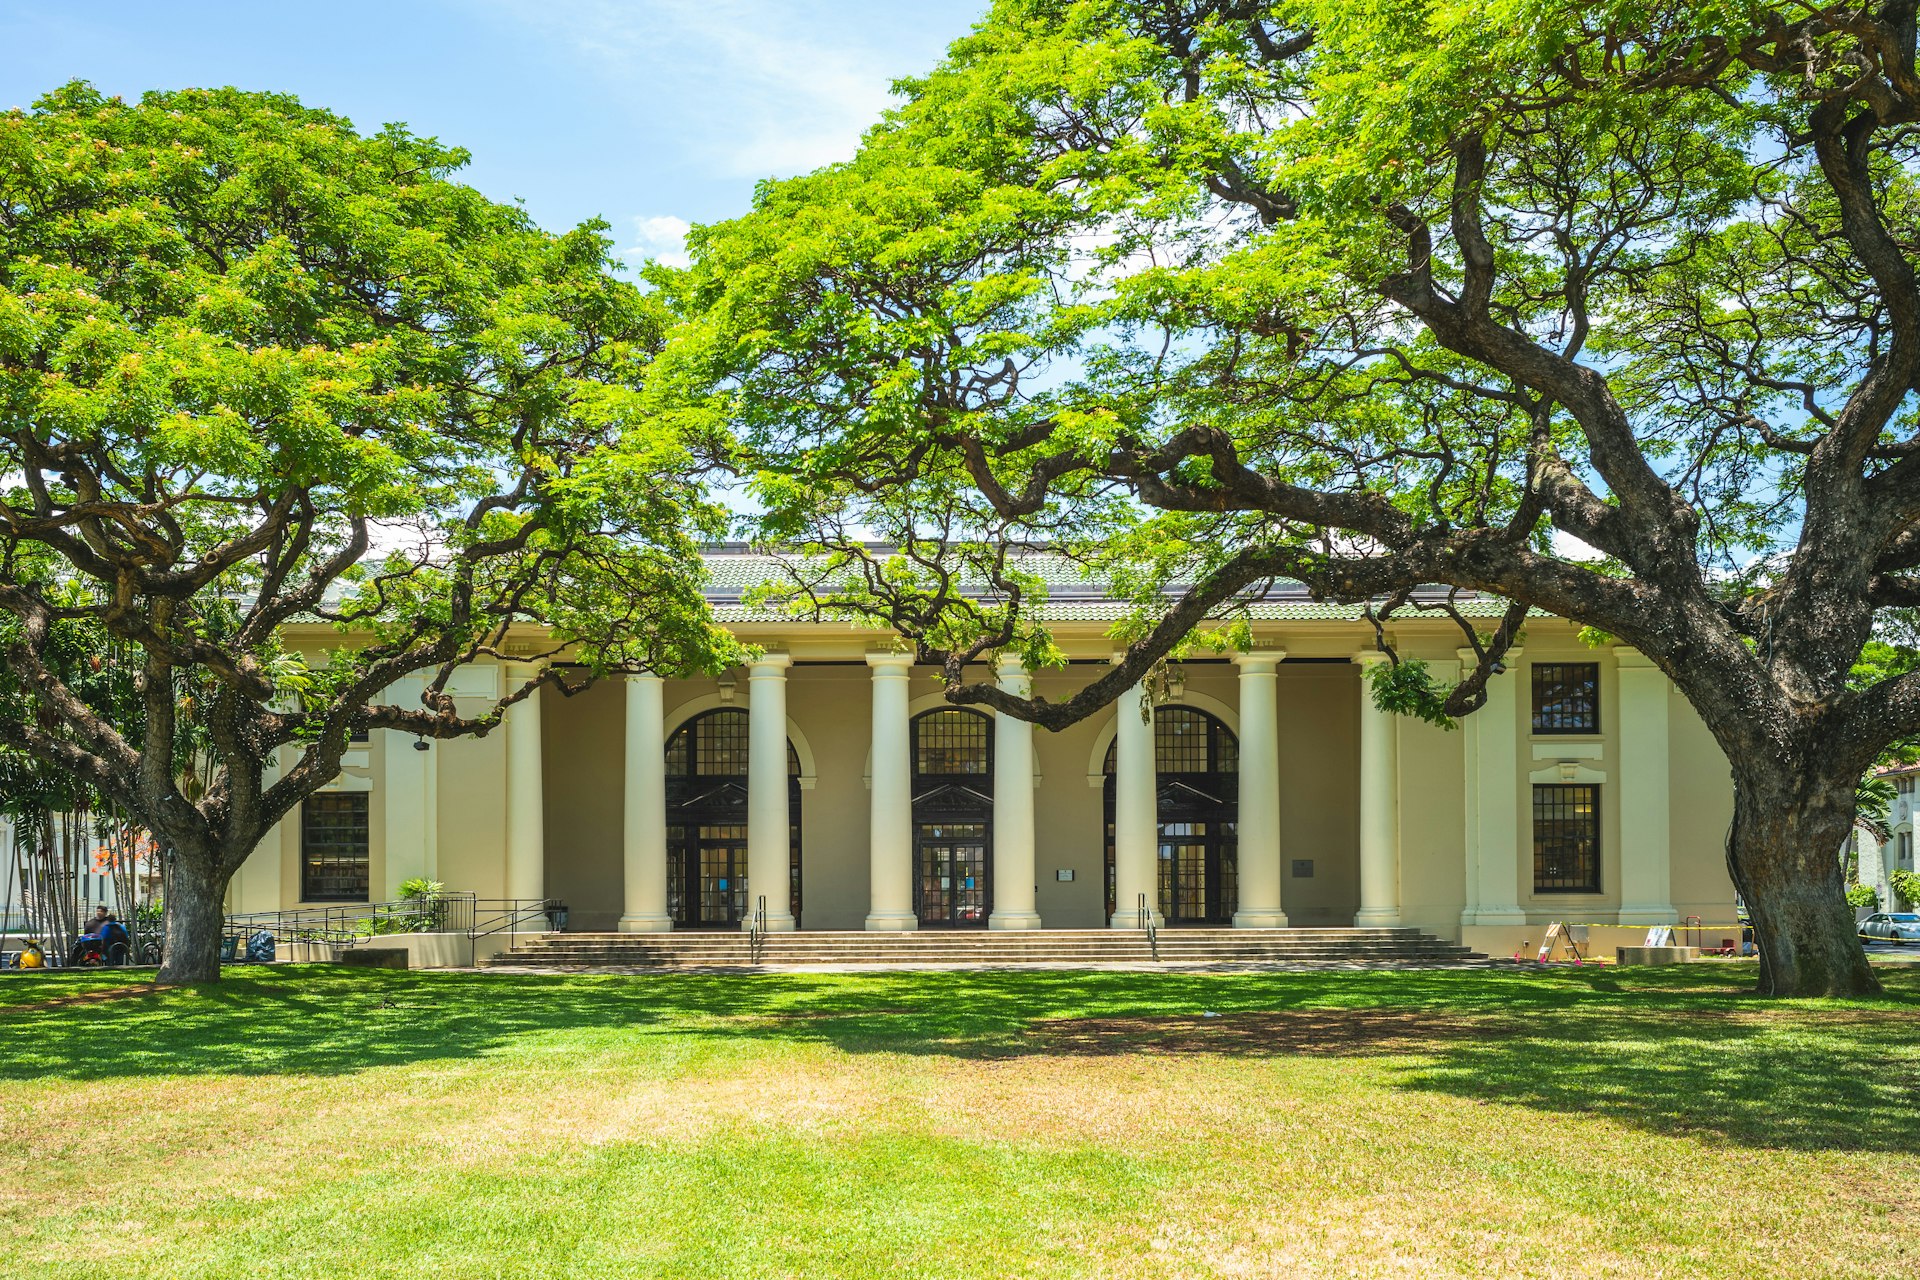 Hawaii State Public Library in Honolulu, Oahu